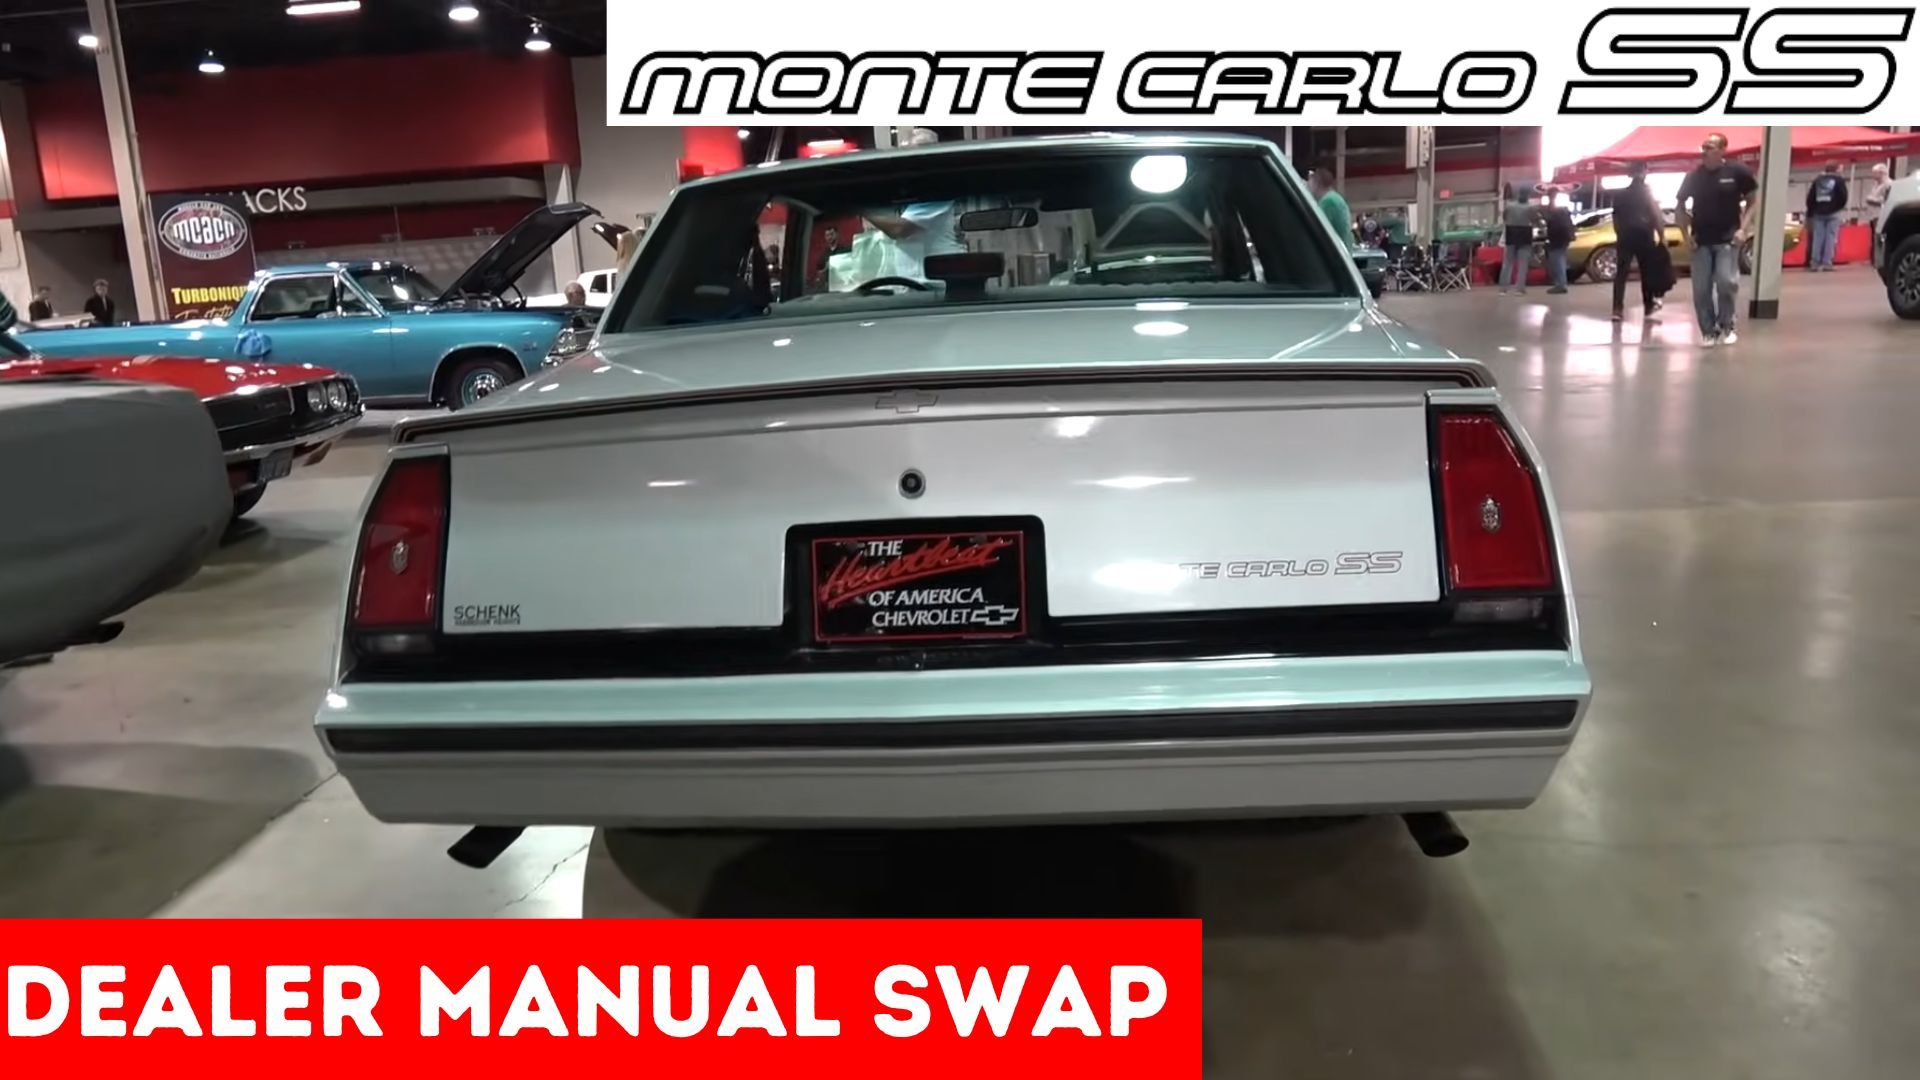 Silver Chevrolet Monte Carlo SS Schenk with Dealer manual swap